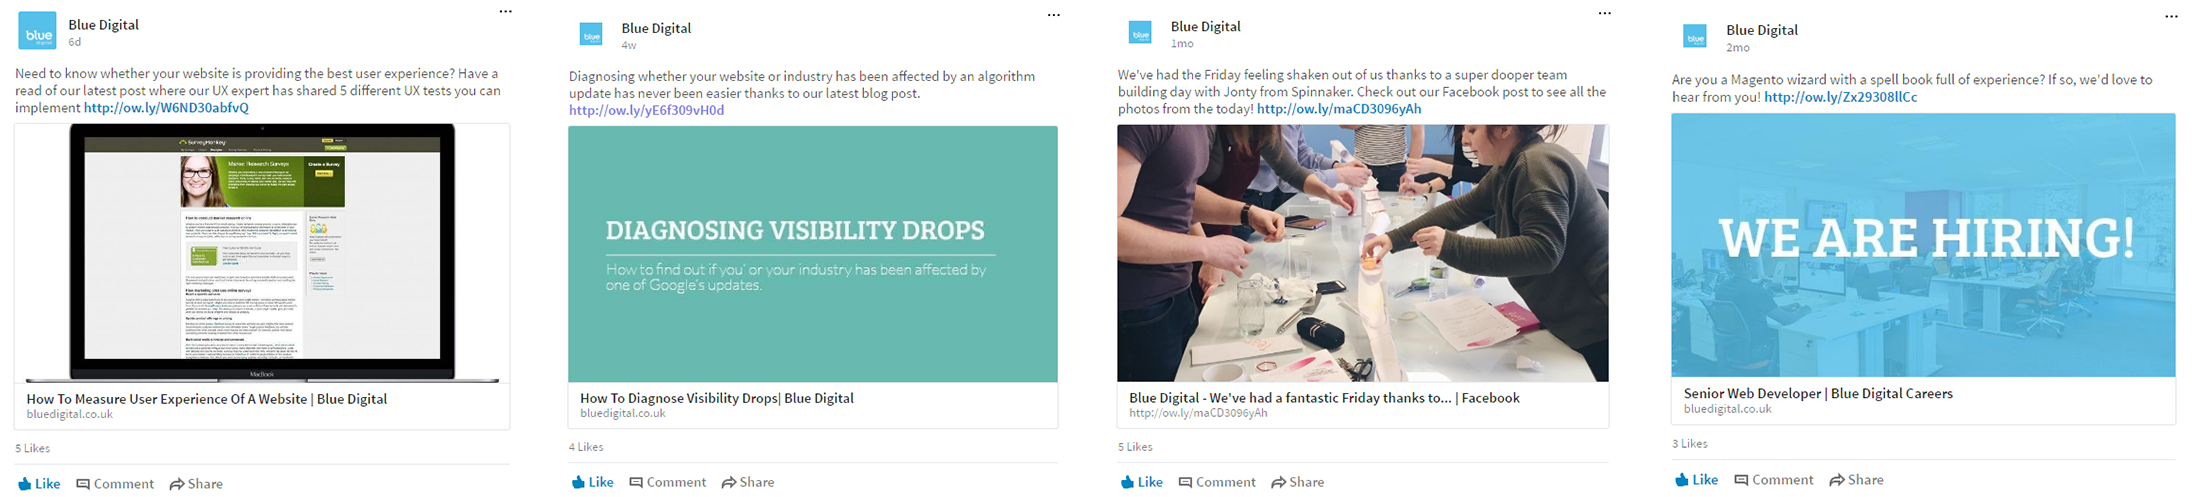 Blue-Digital-LinkedIn